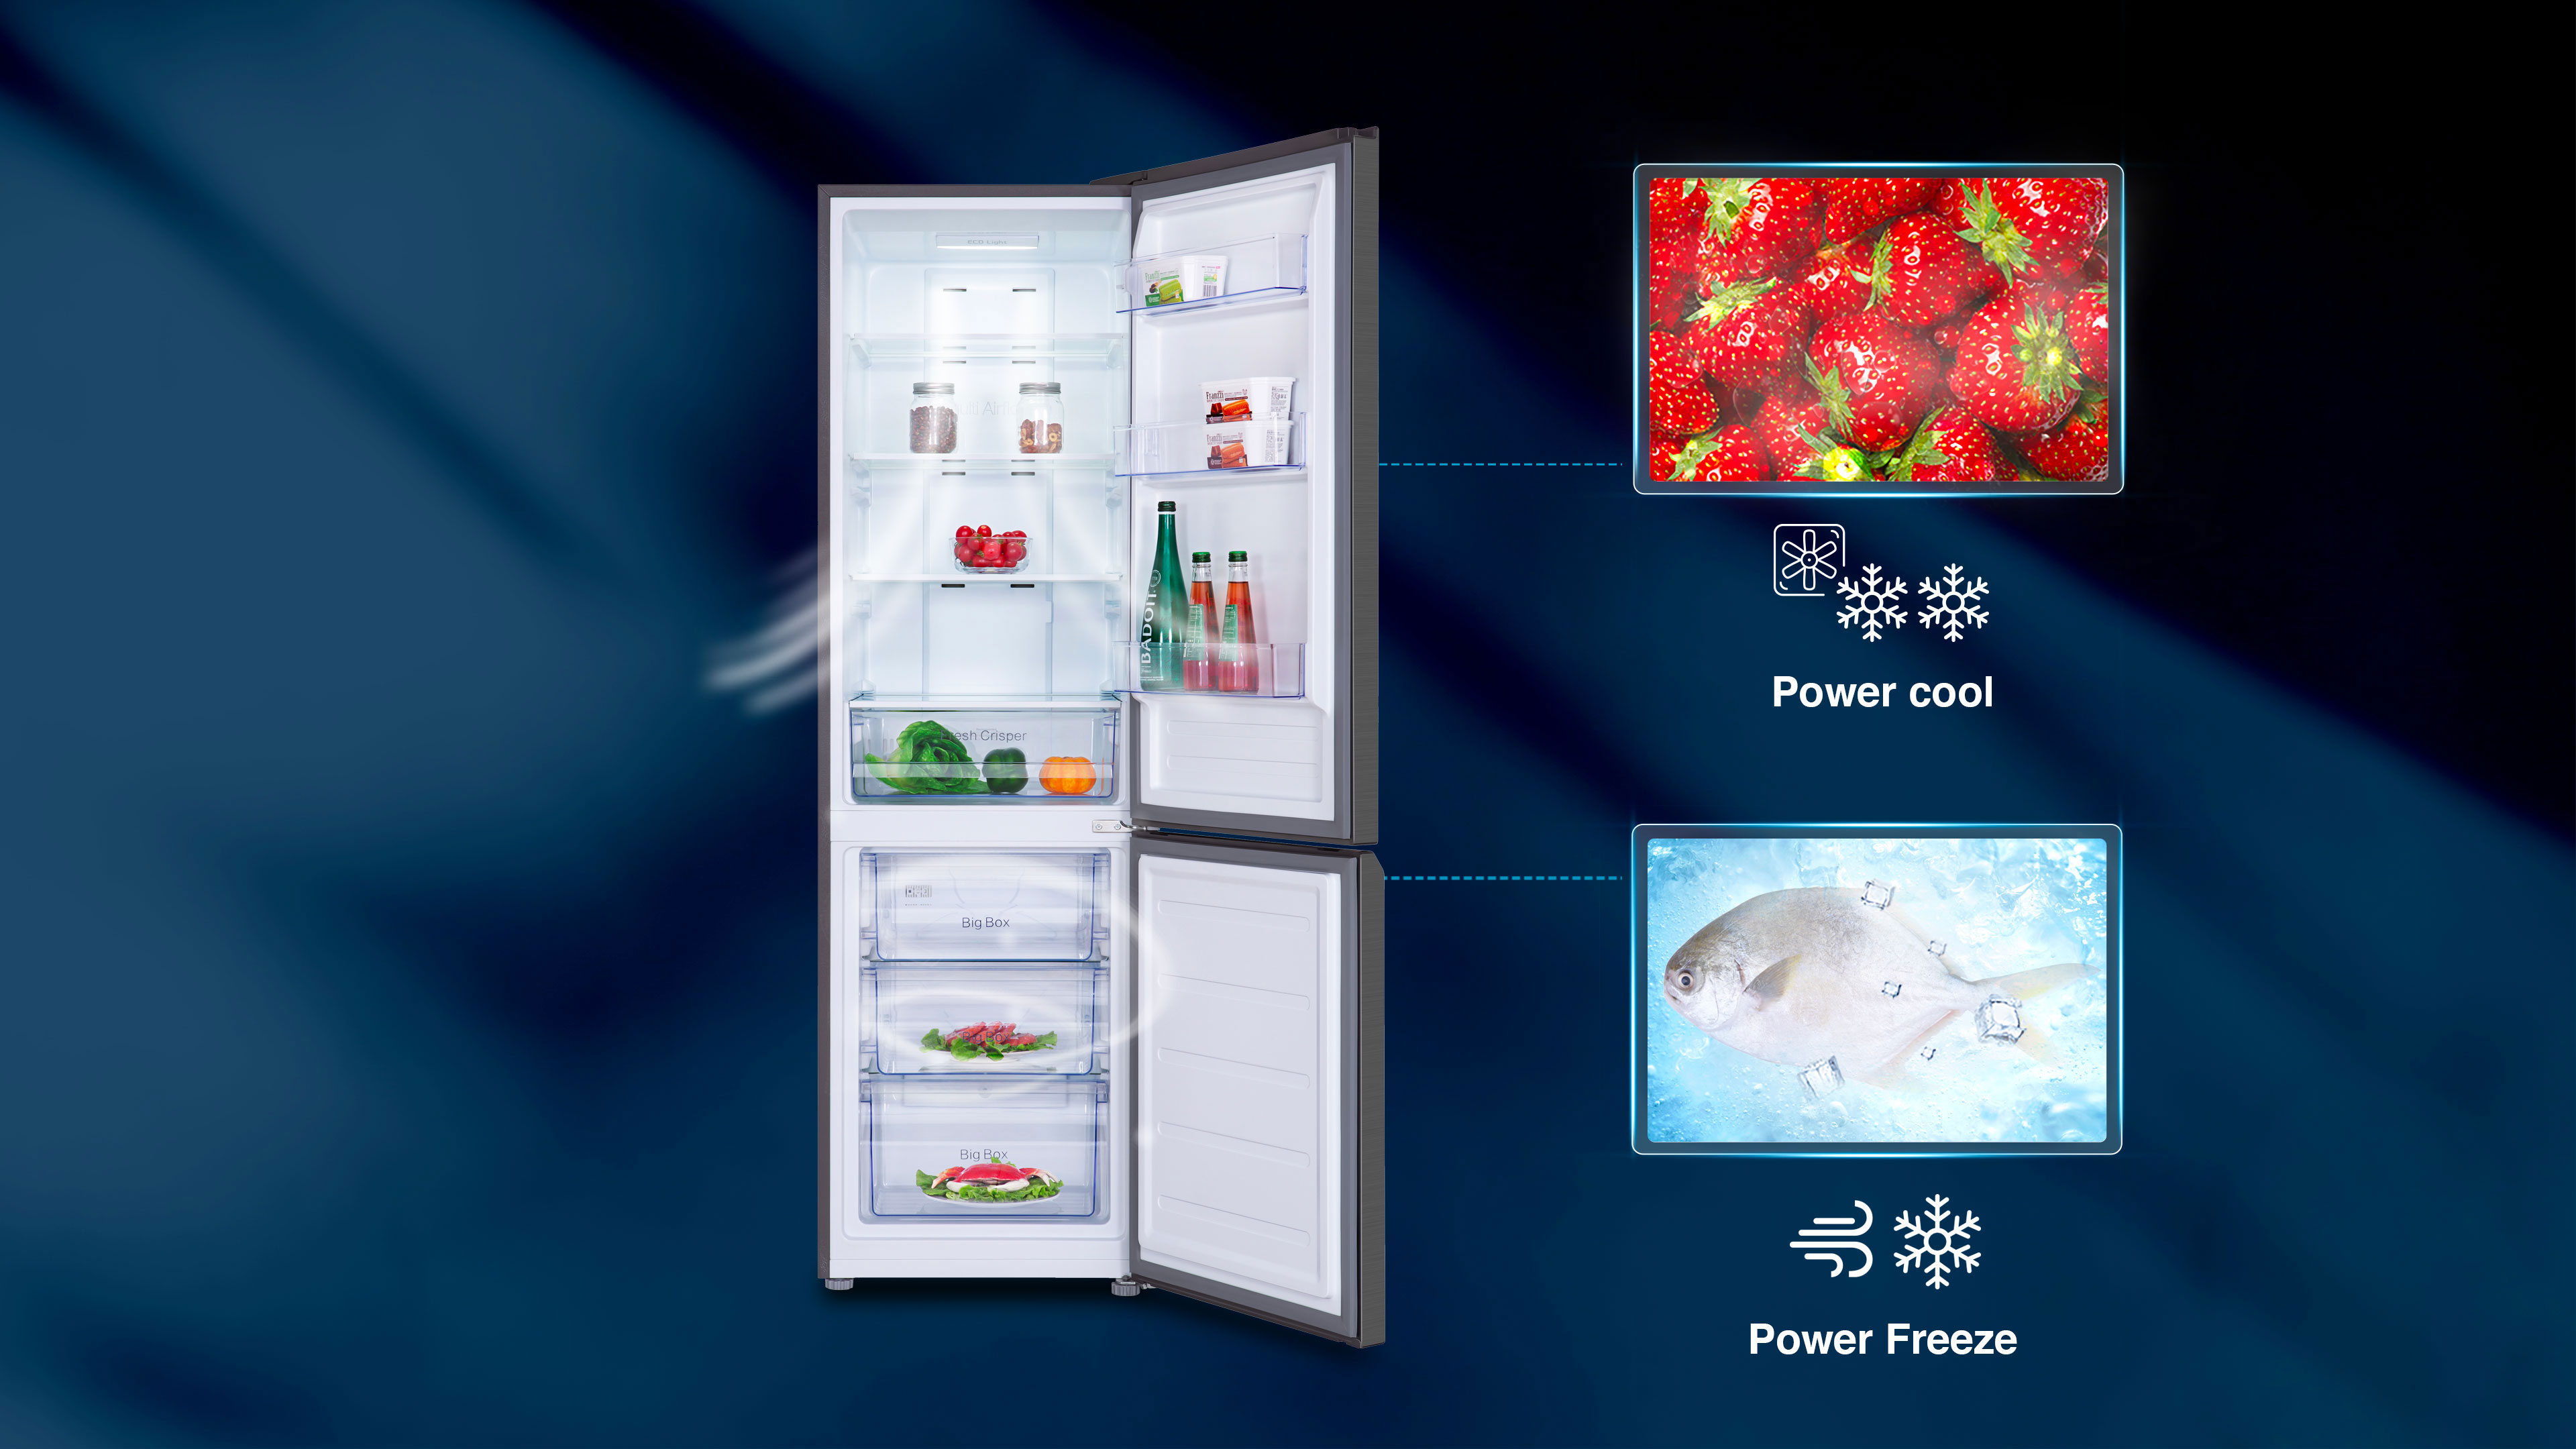 TCL Refrigerators Power Cool